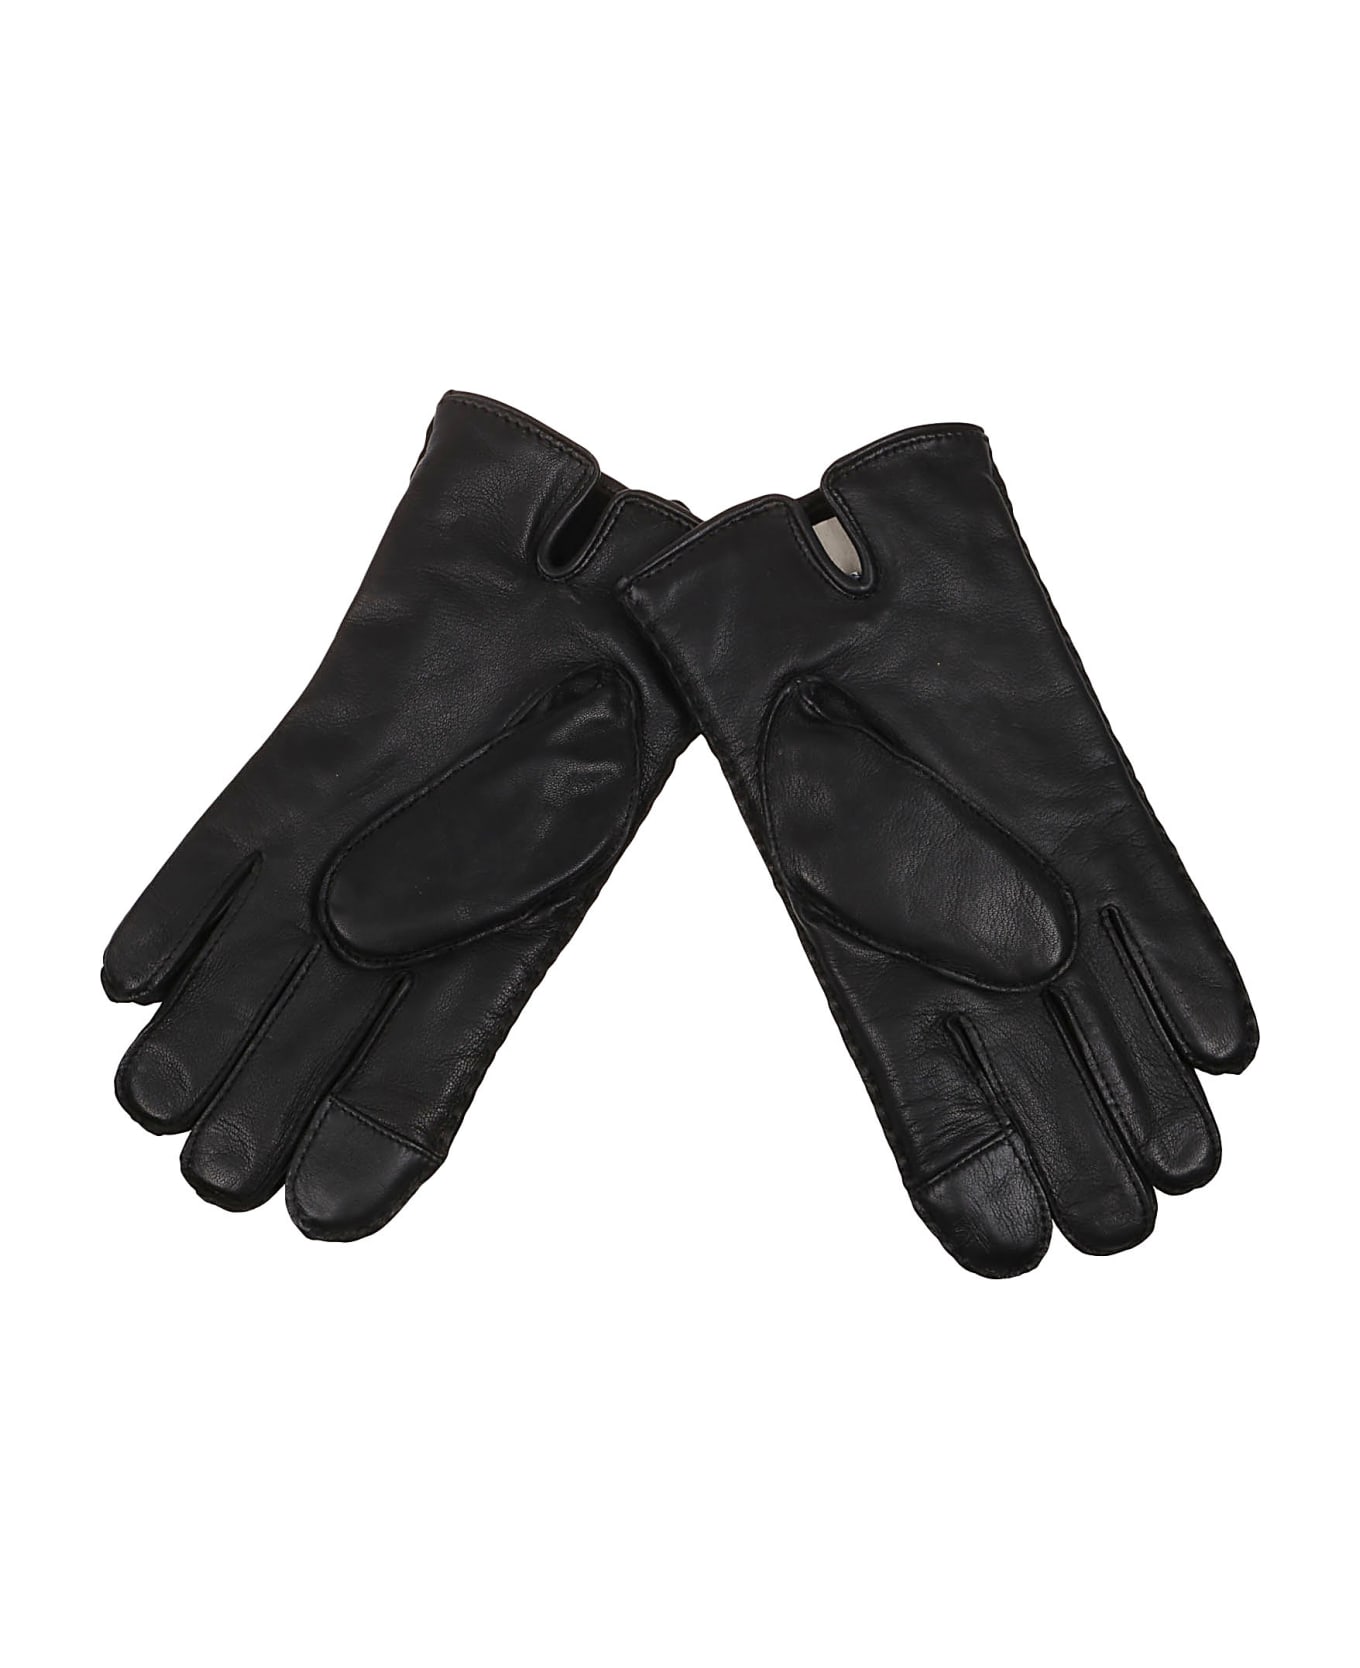 Polo Ralph Lauren Glove - Black